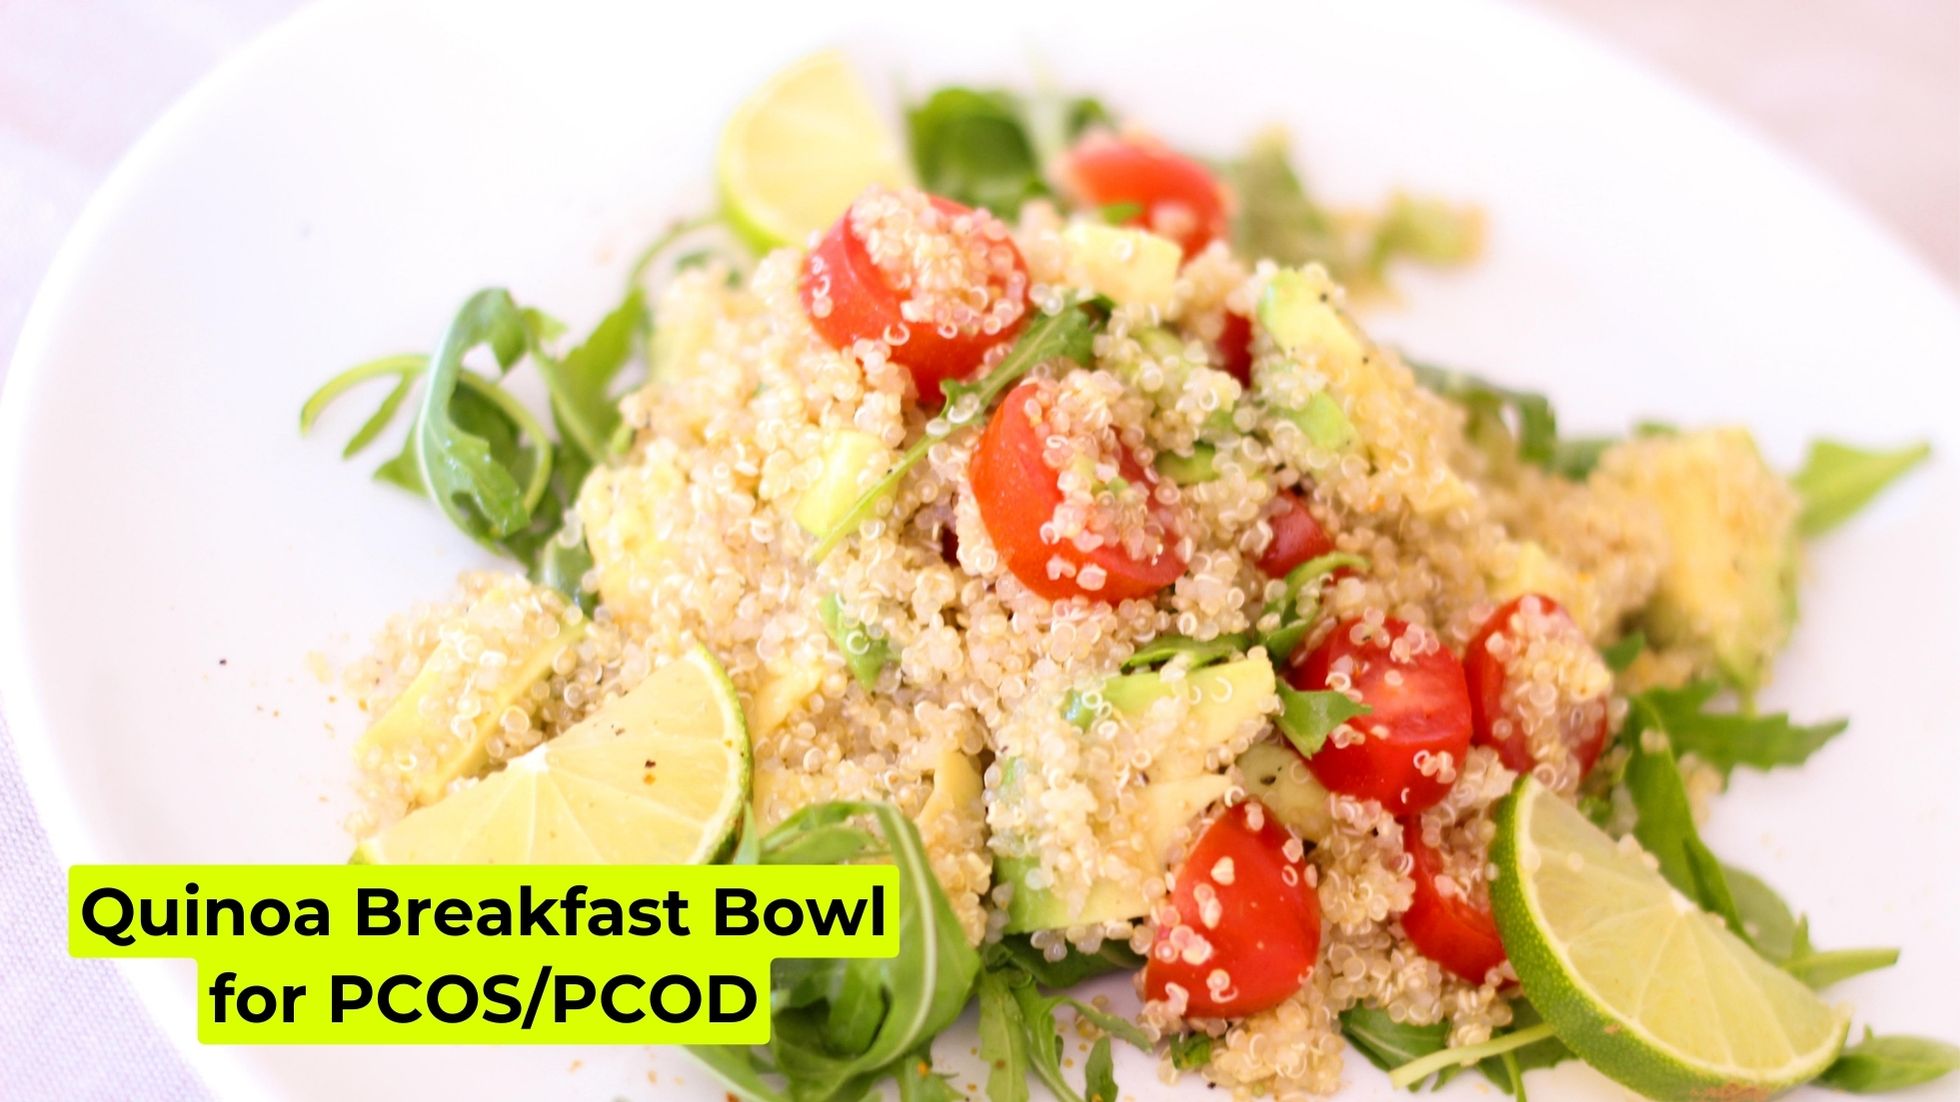 Quinoa Breakfast Bowl for PCOS/PCOD